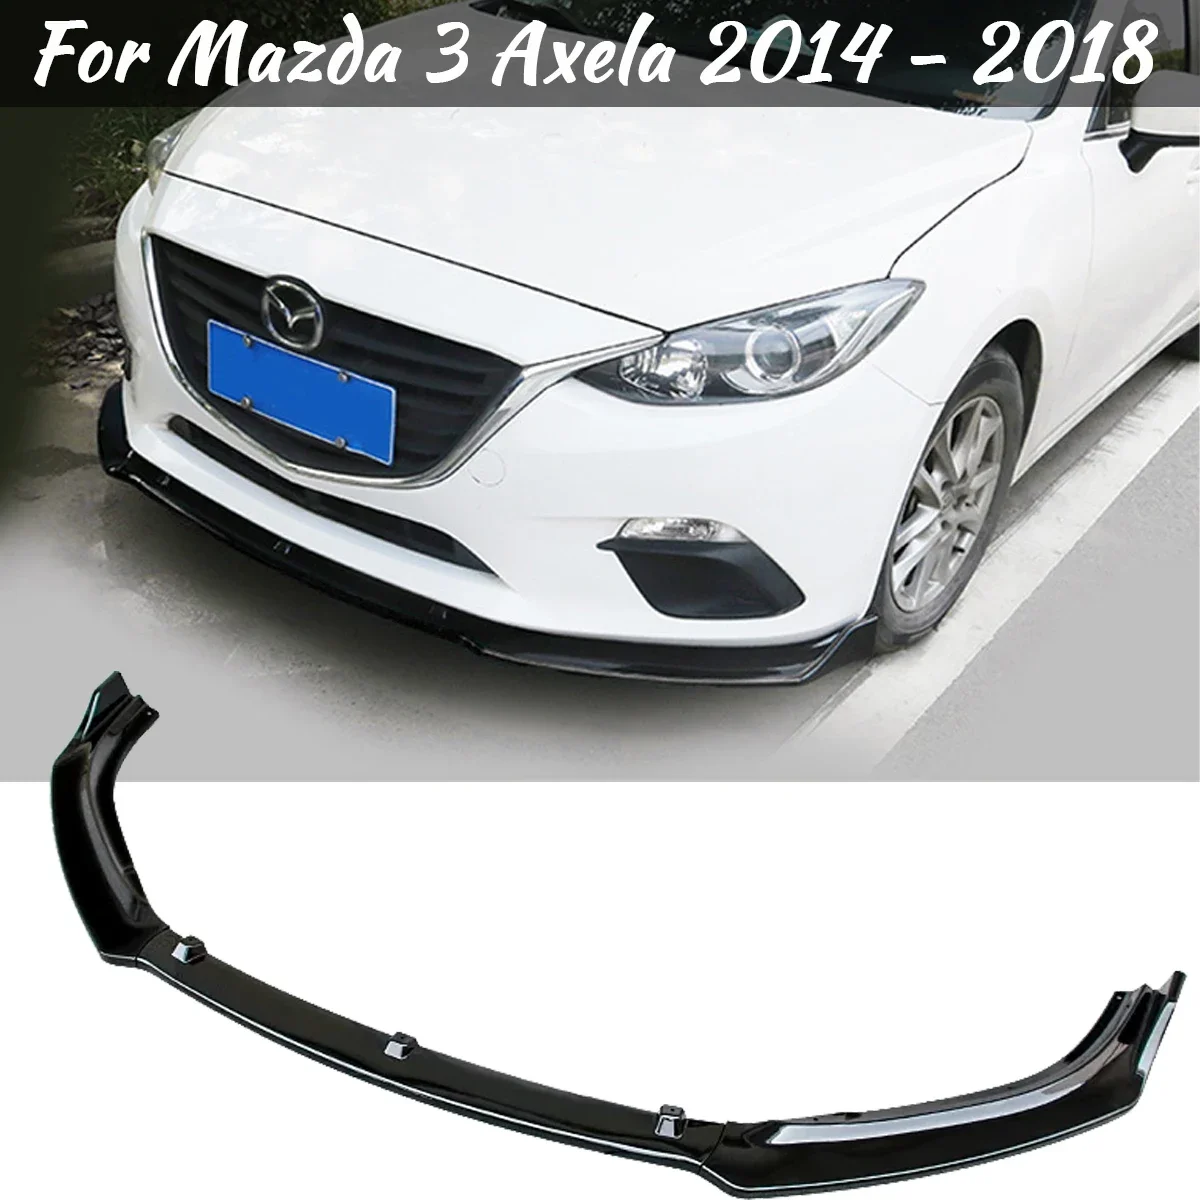 

Glossy Black Front Bumper Lip Spoiler Splitters Diffuser Body Kit Protector Guards For Mazda 3 Axela 2014 - 2018 Car Accessories